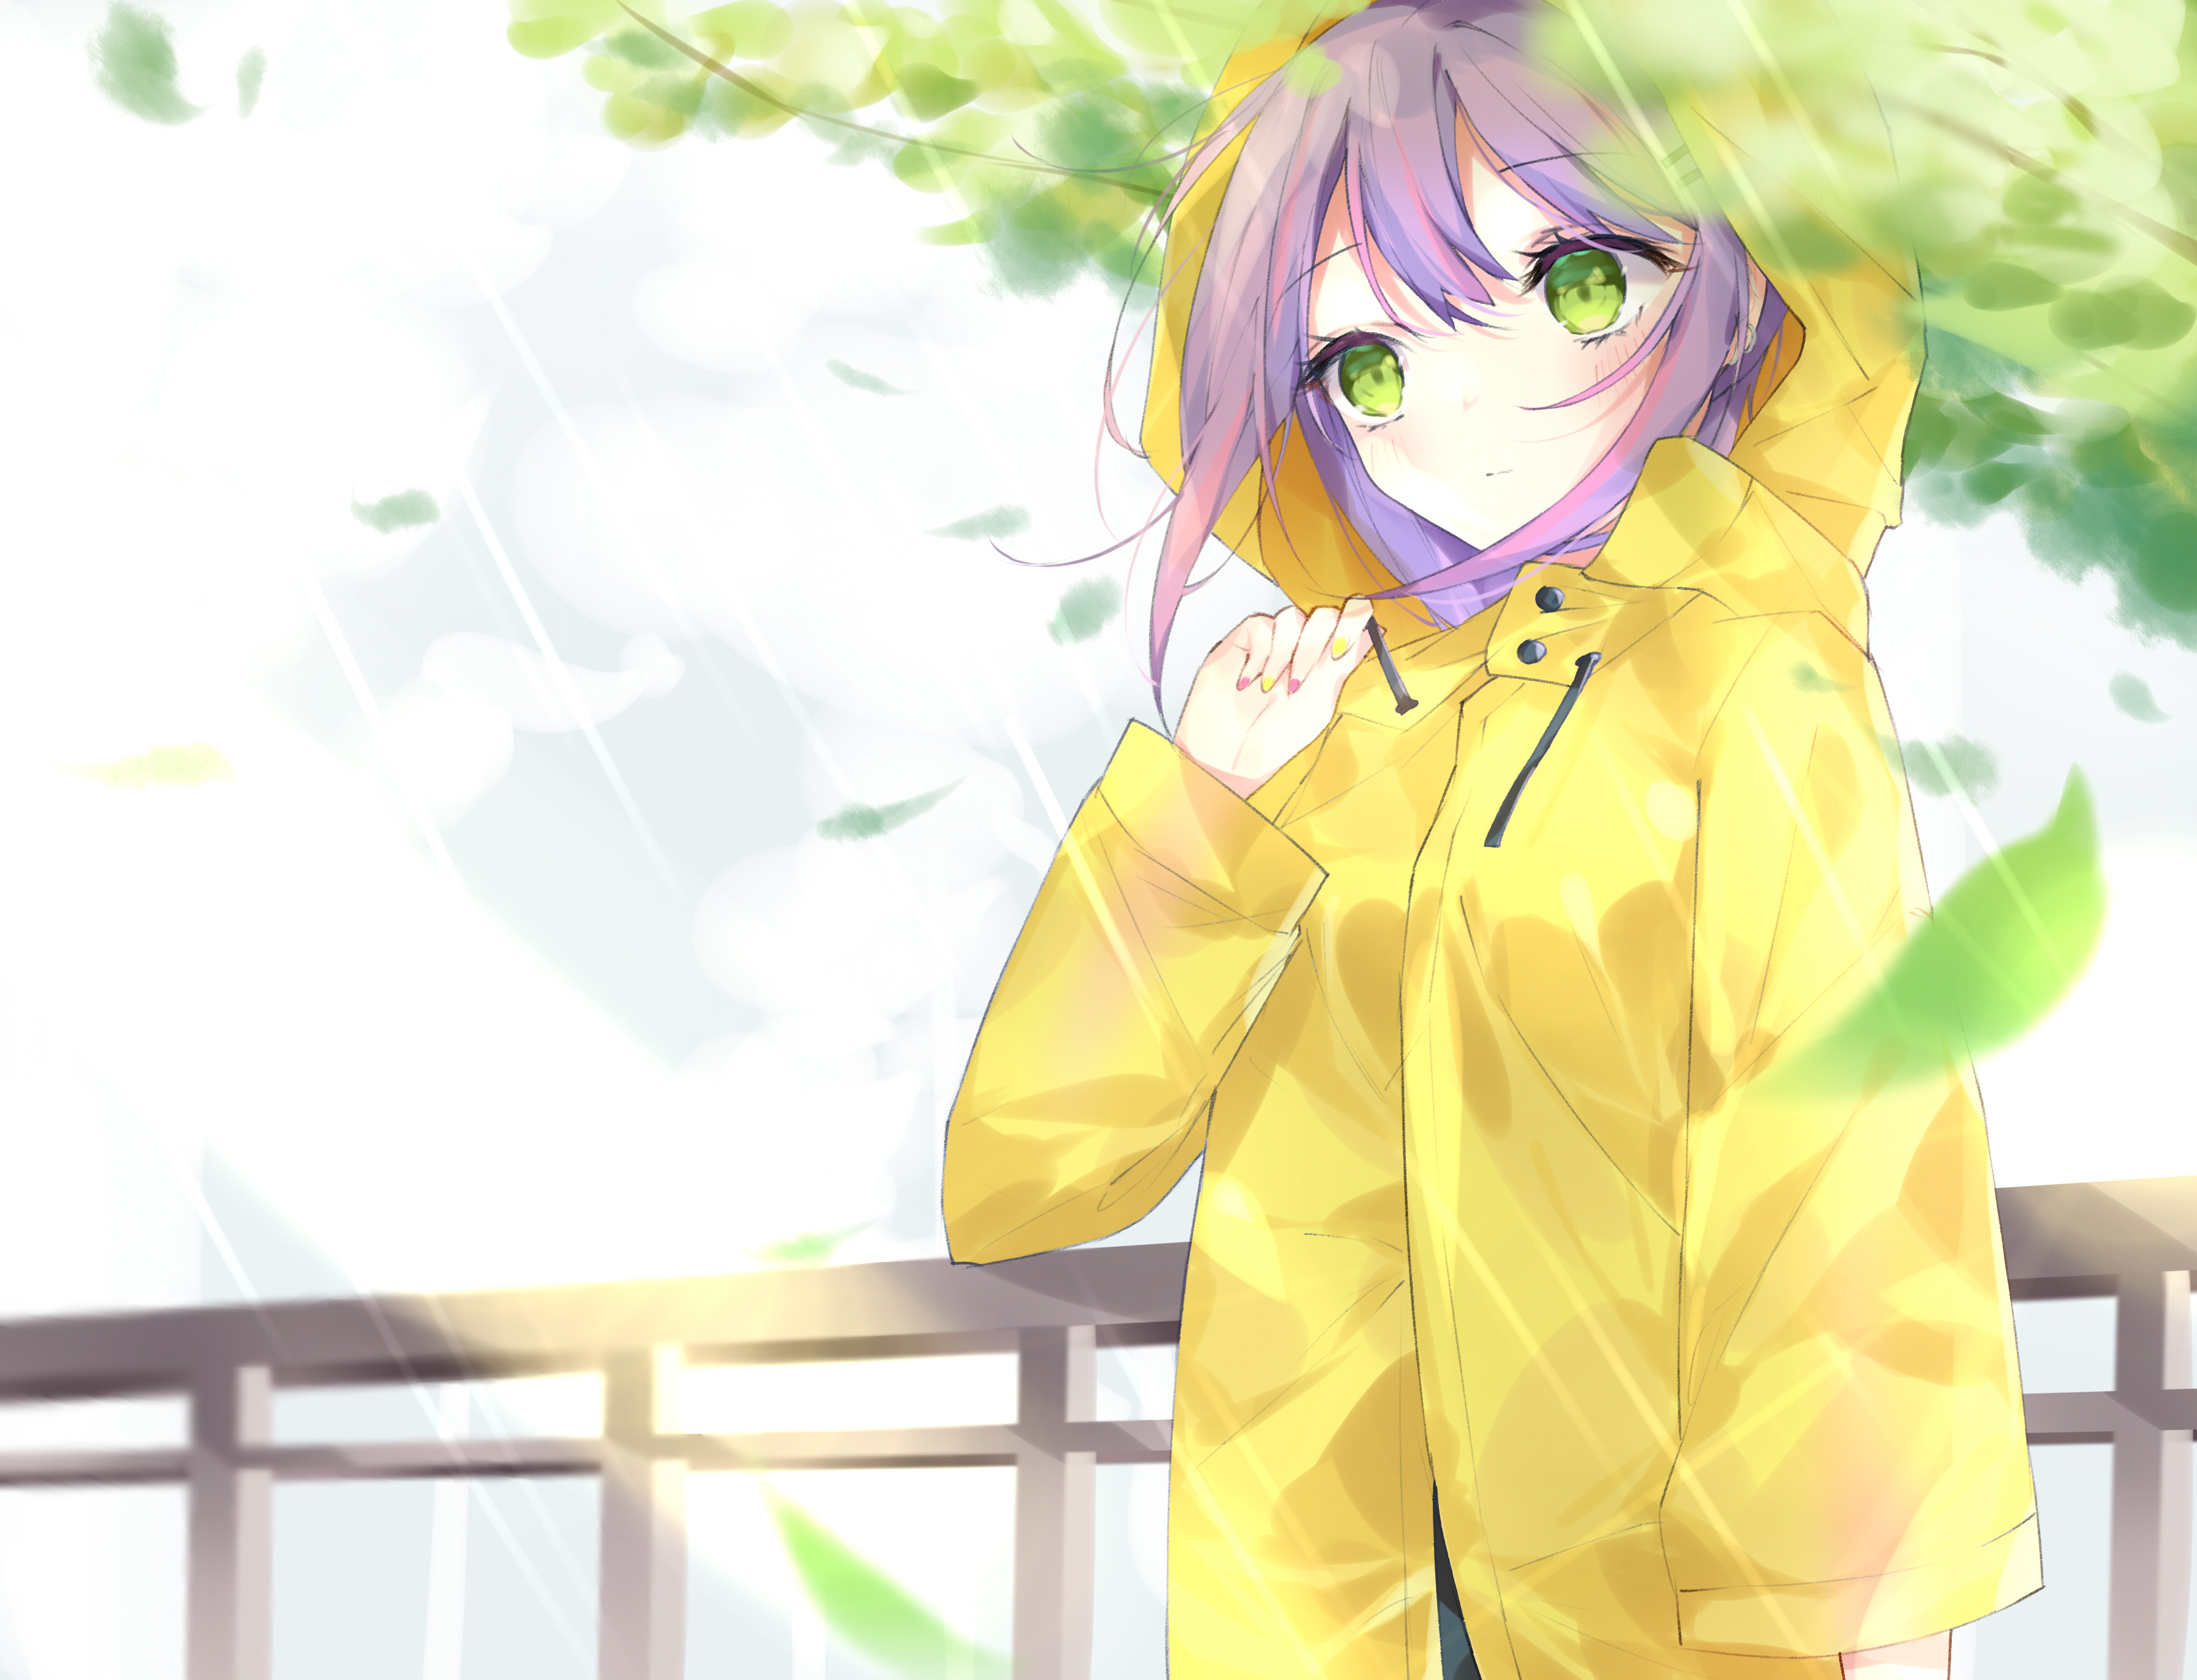 2D Anime Anime Girls Digital Art Digital Purple Hair Rain Raincoat Green Eyes Shy Women Outdoors Out 3513x2687